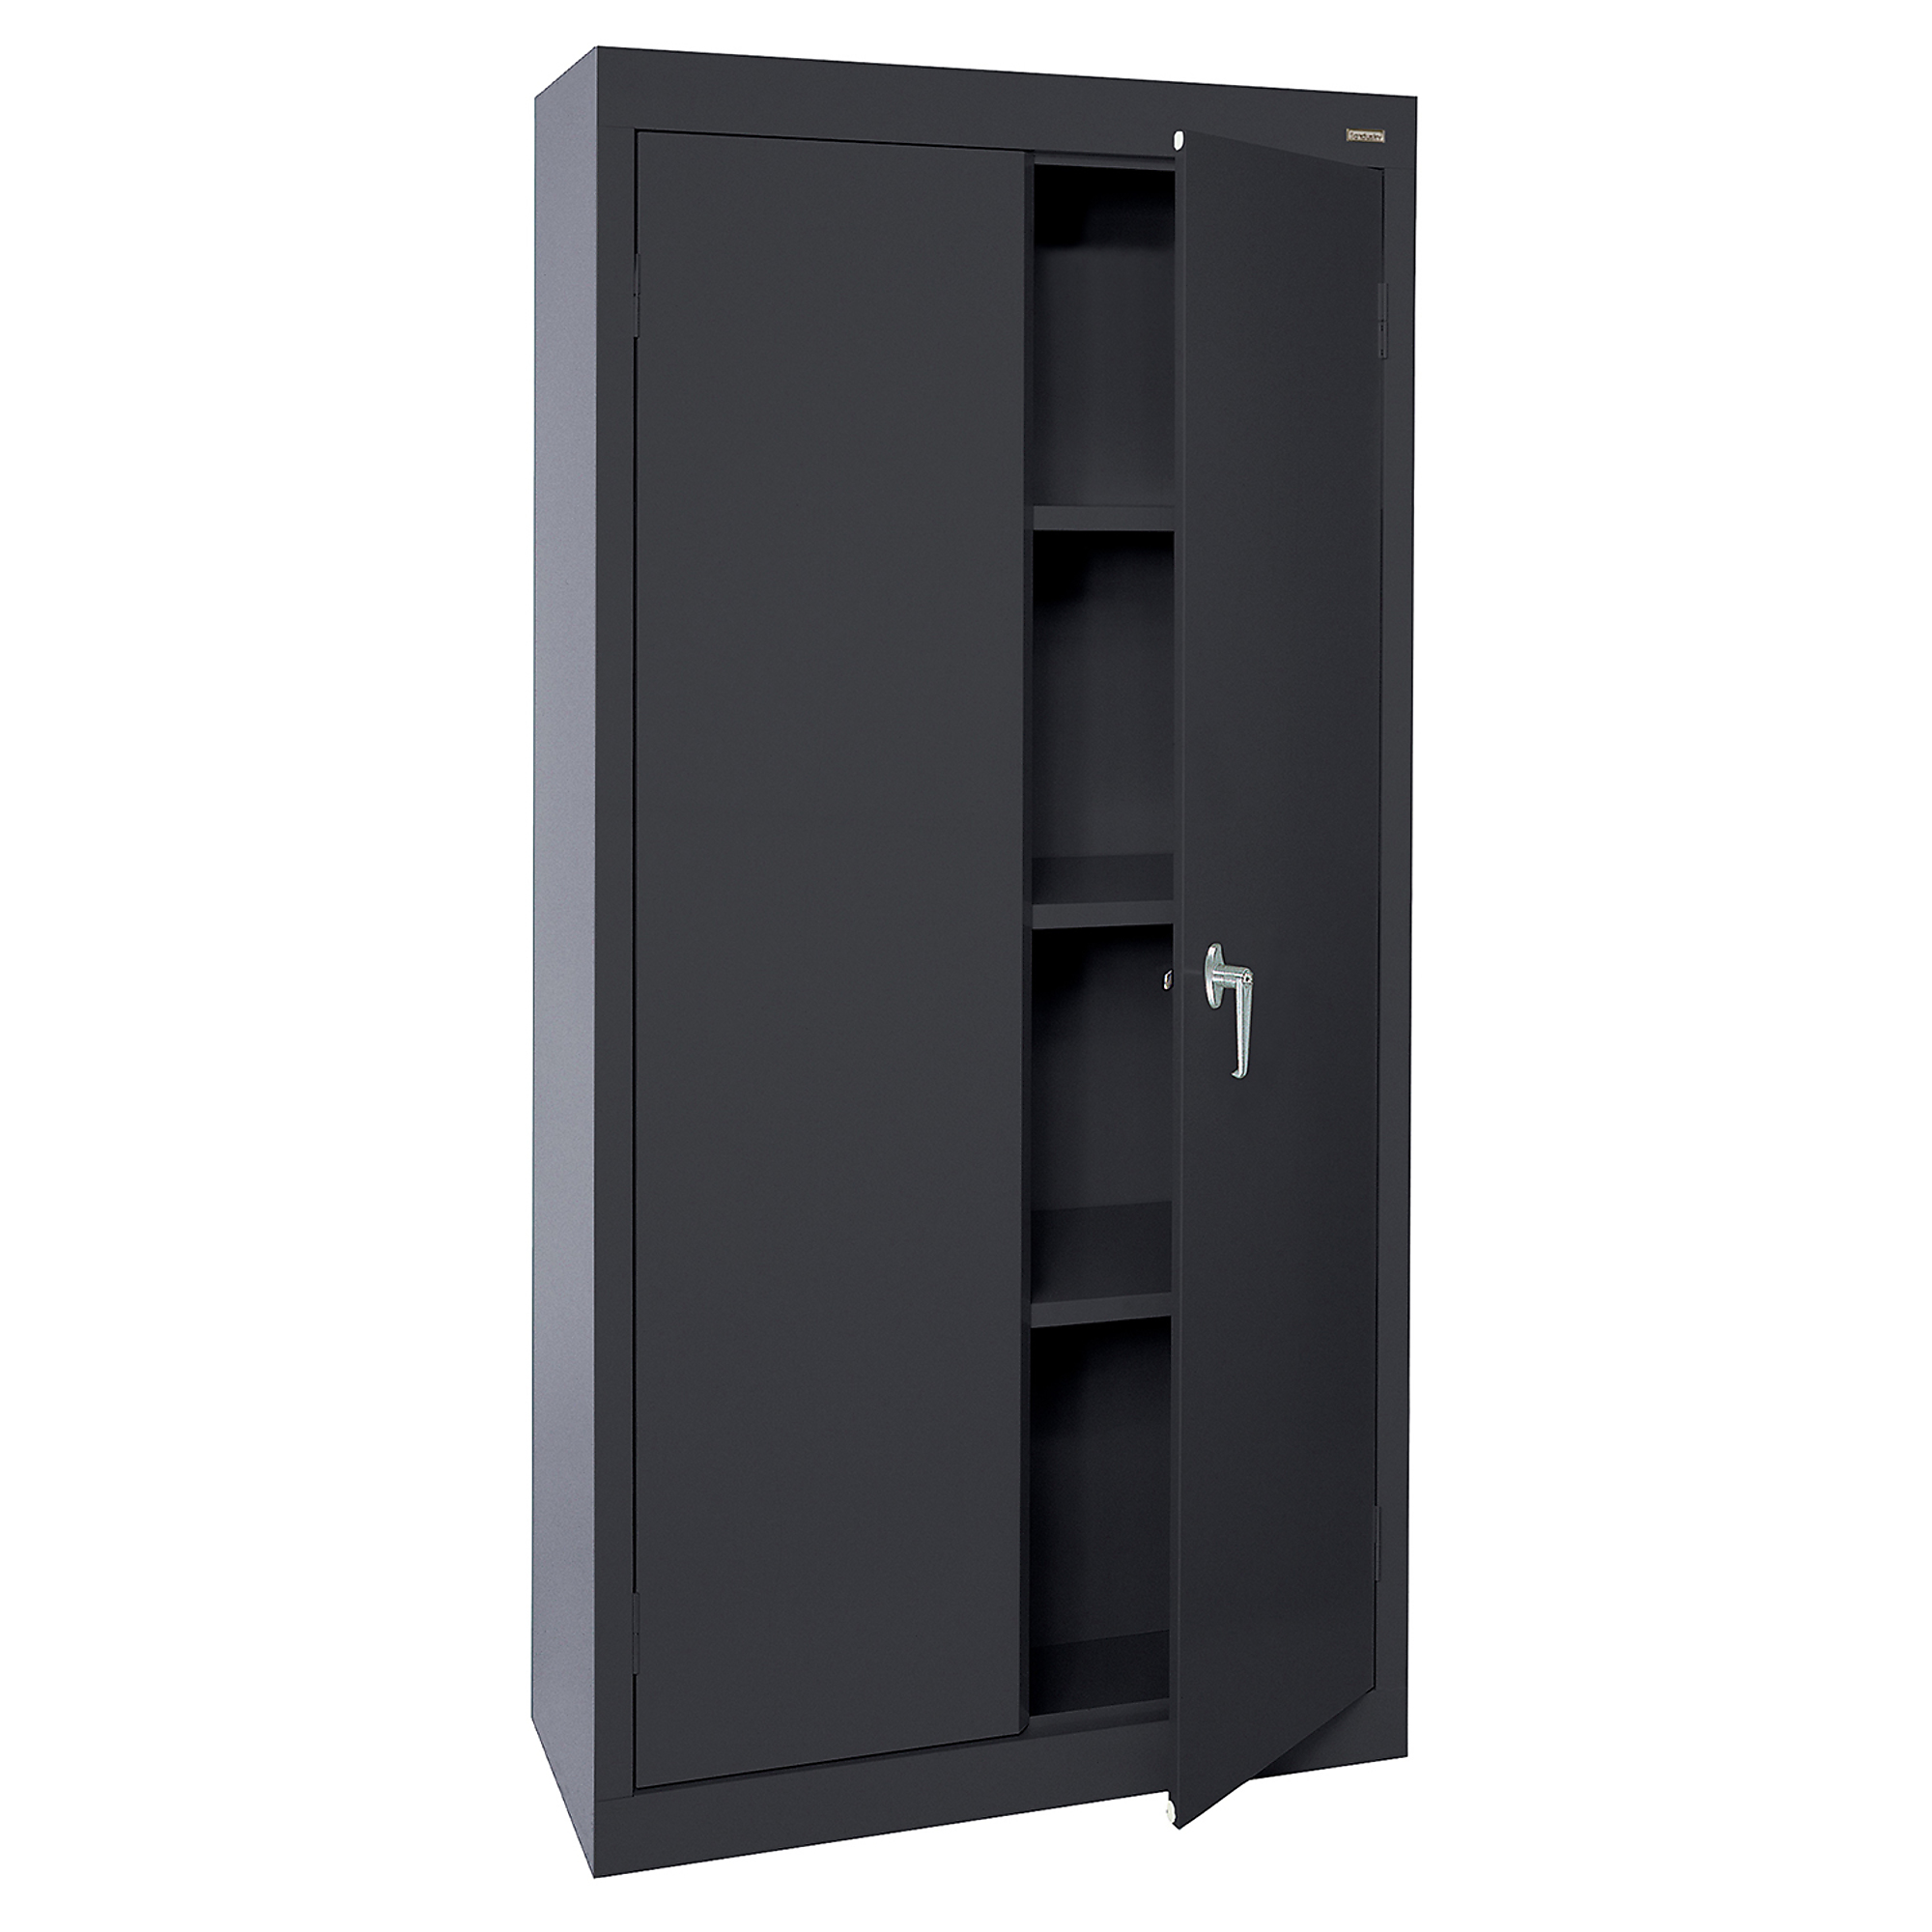 Sandusky Lee Sandusky, Value Line Cabinet 30x18x72 Black, Height 72 in, Width 30 in, Color Black, Model VF31301872-09